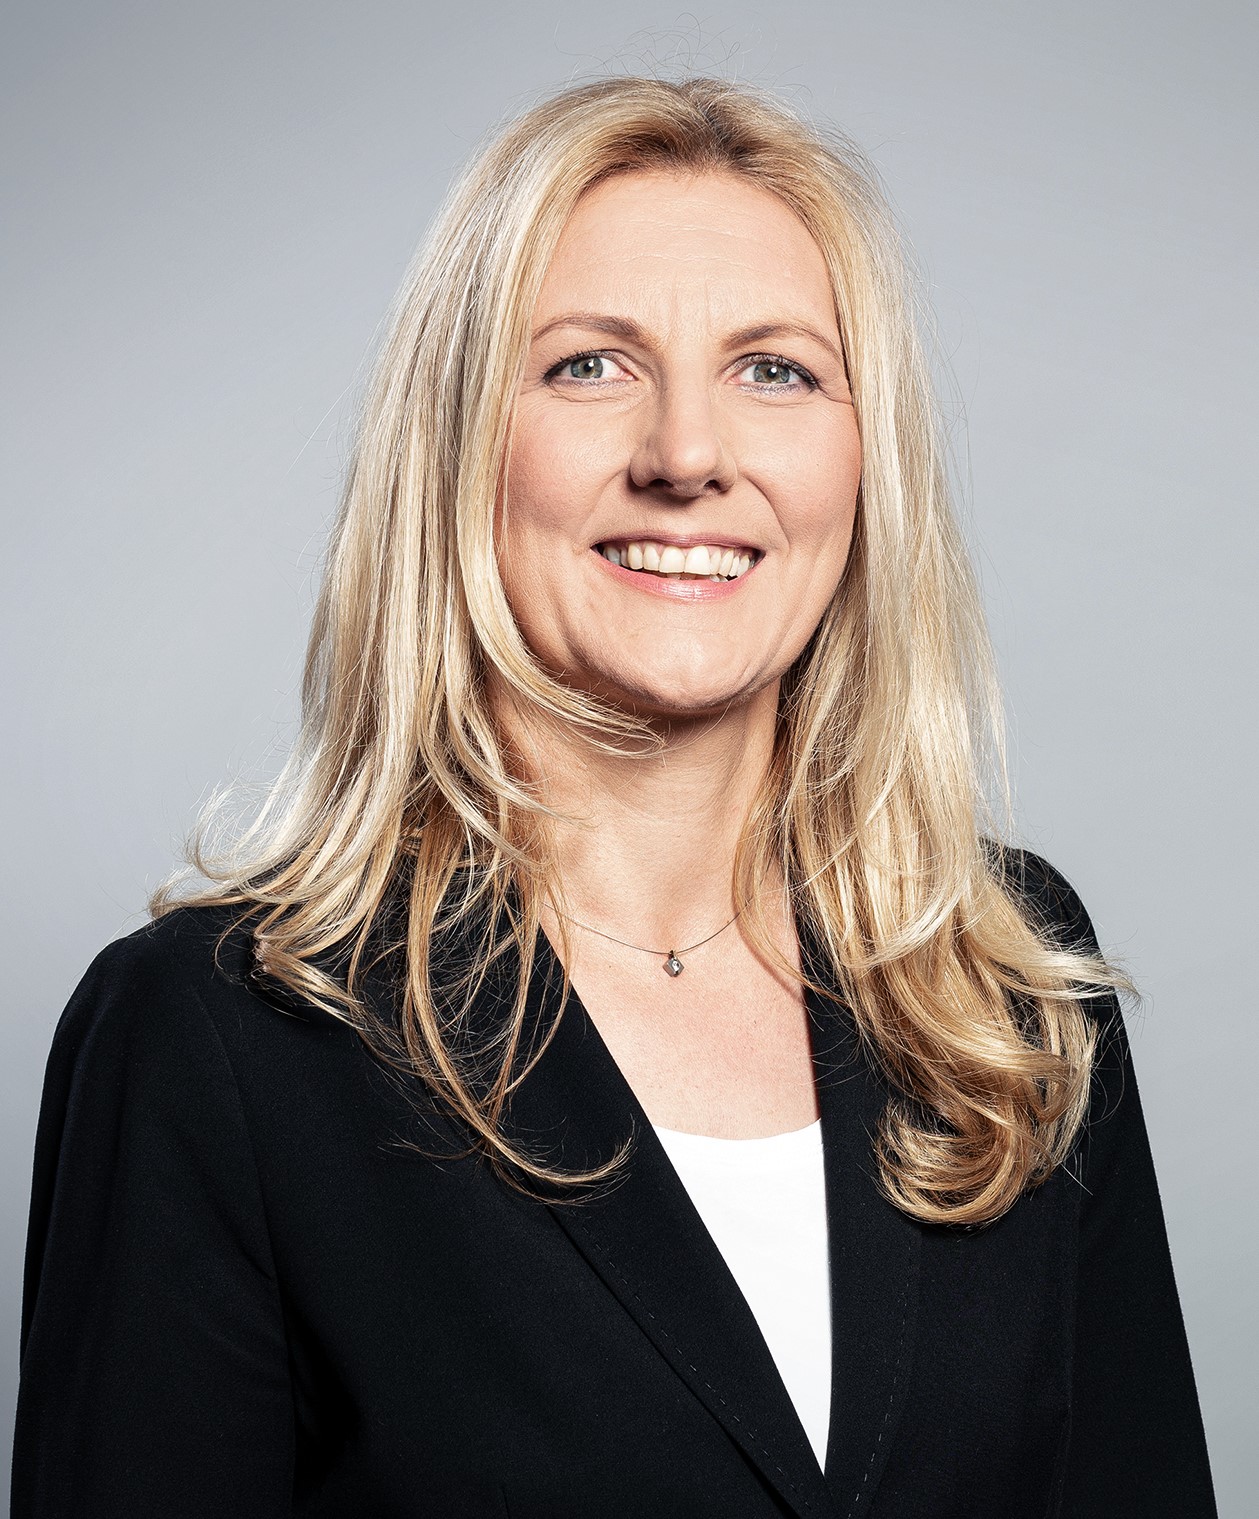 Rodeheger, Karin (CDU, FDP)